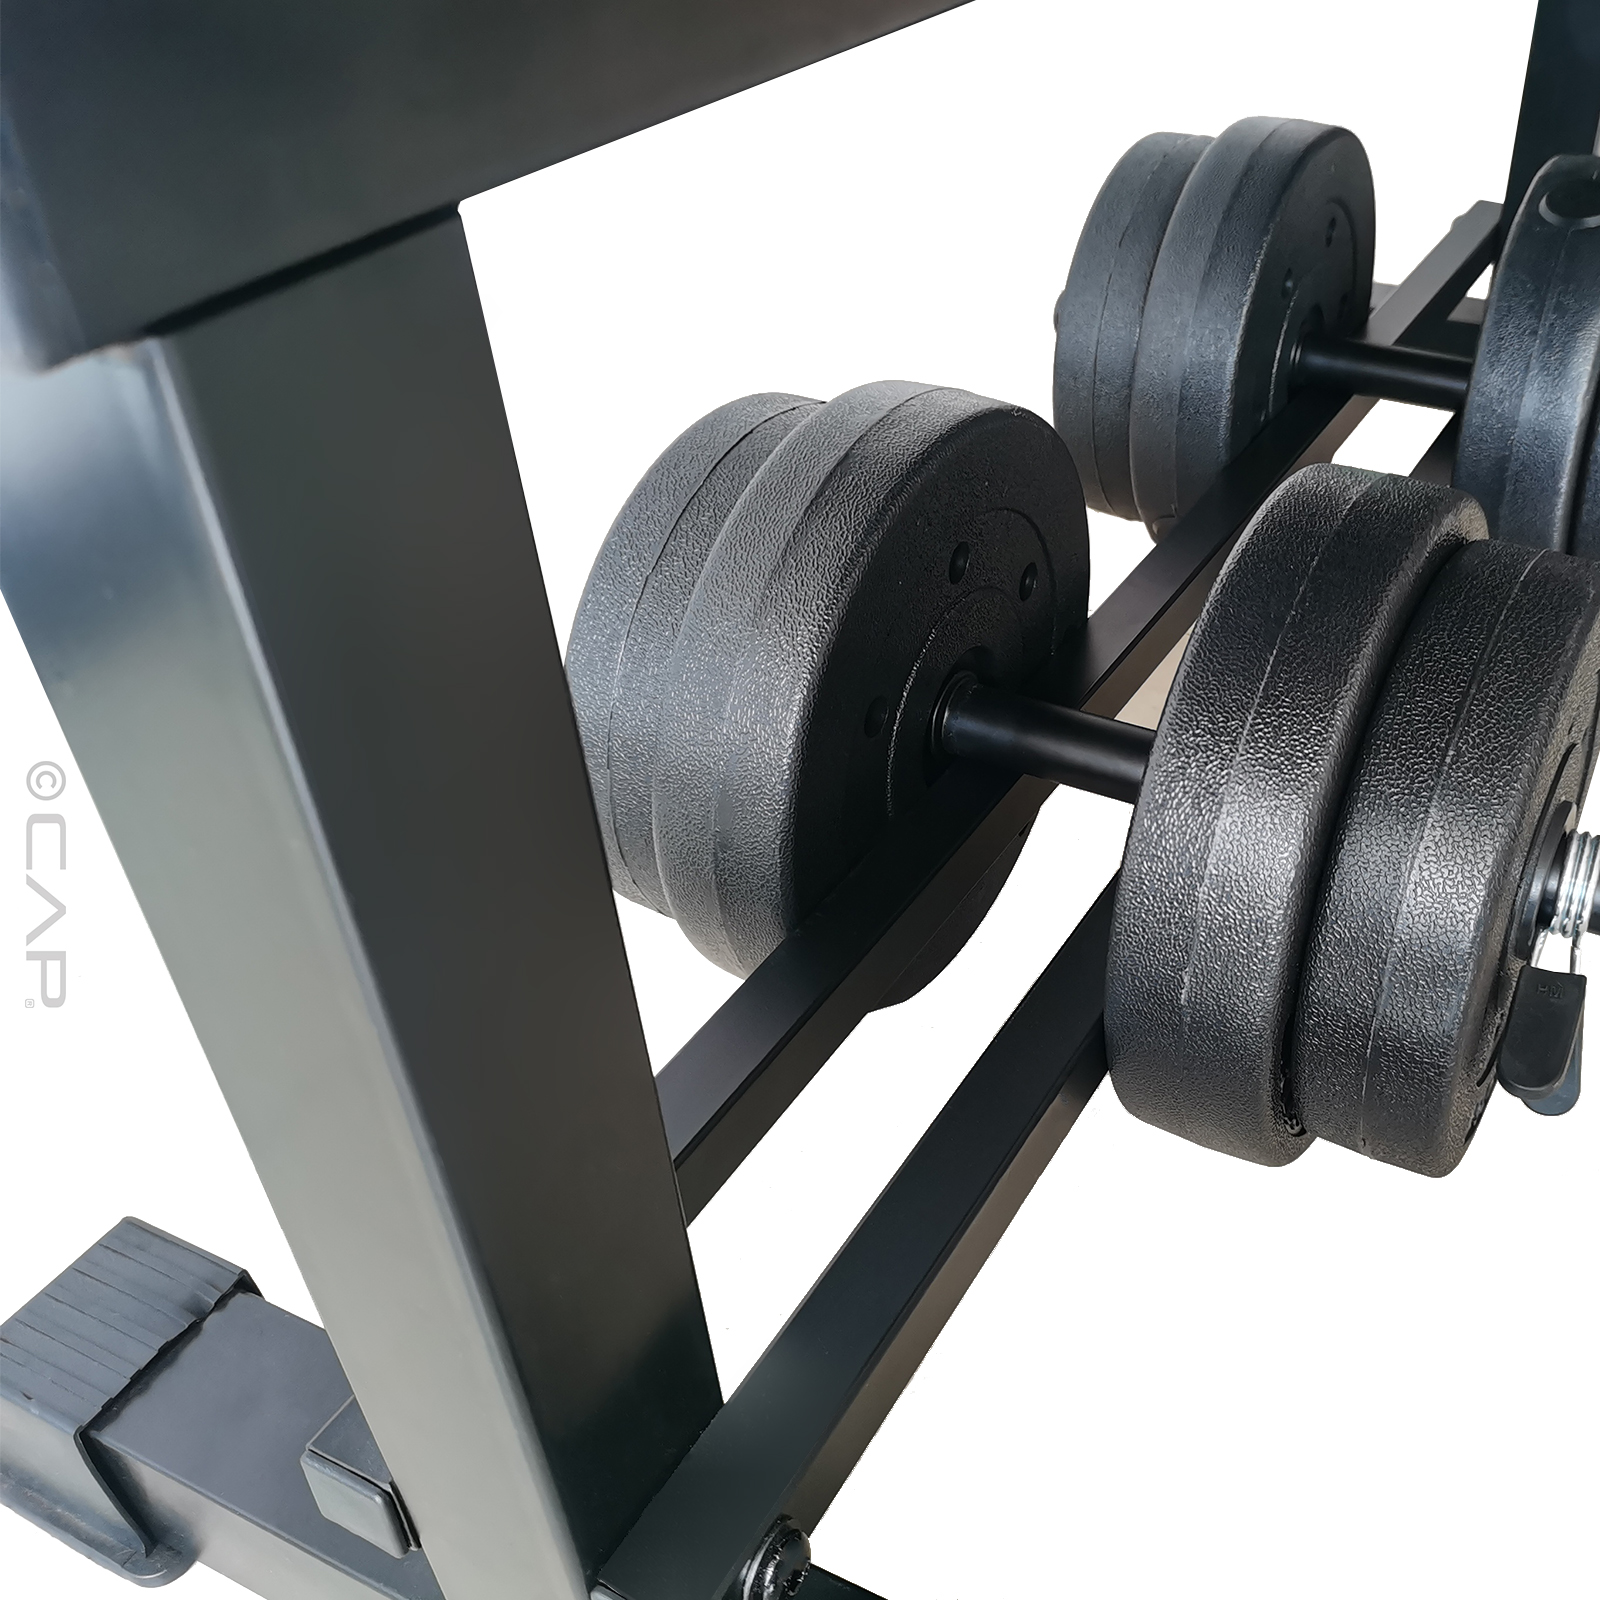 CAP Flat Weight Bench & 50 lb Adjustable Vinyl Dumbbell Set Combo - image 4 of 5